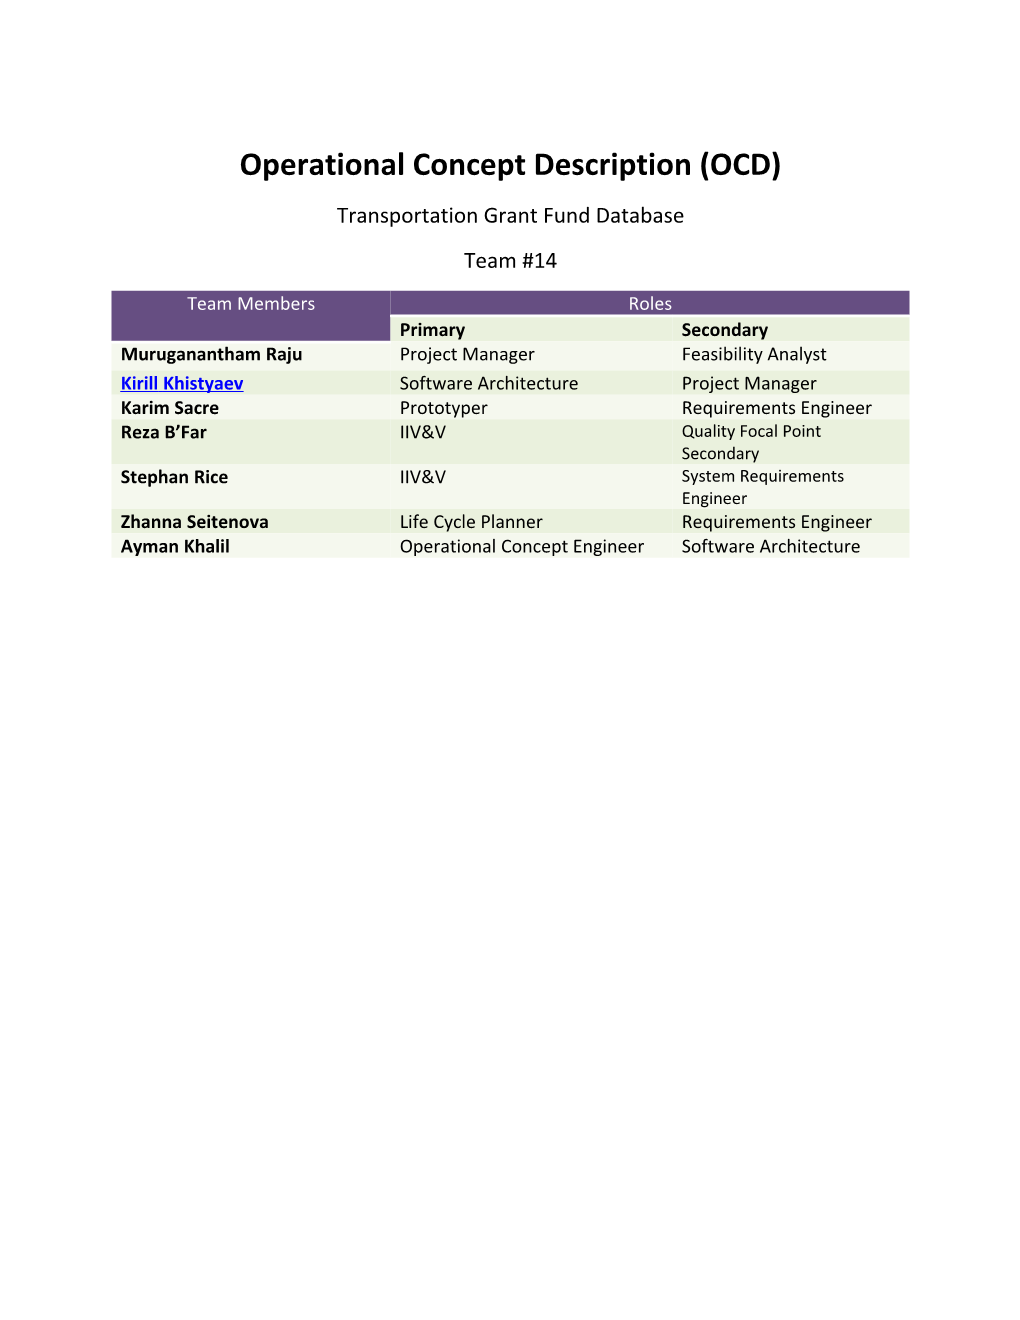 Operational Concept Description (OCD) for NDI Version 1.0